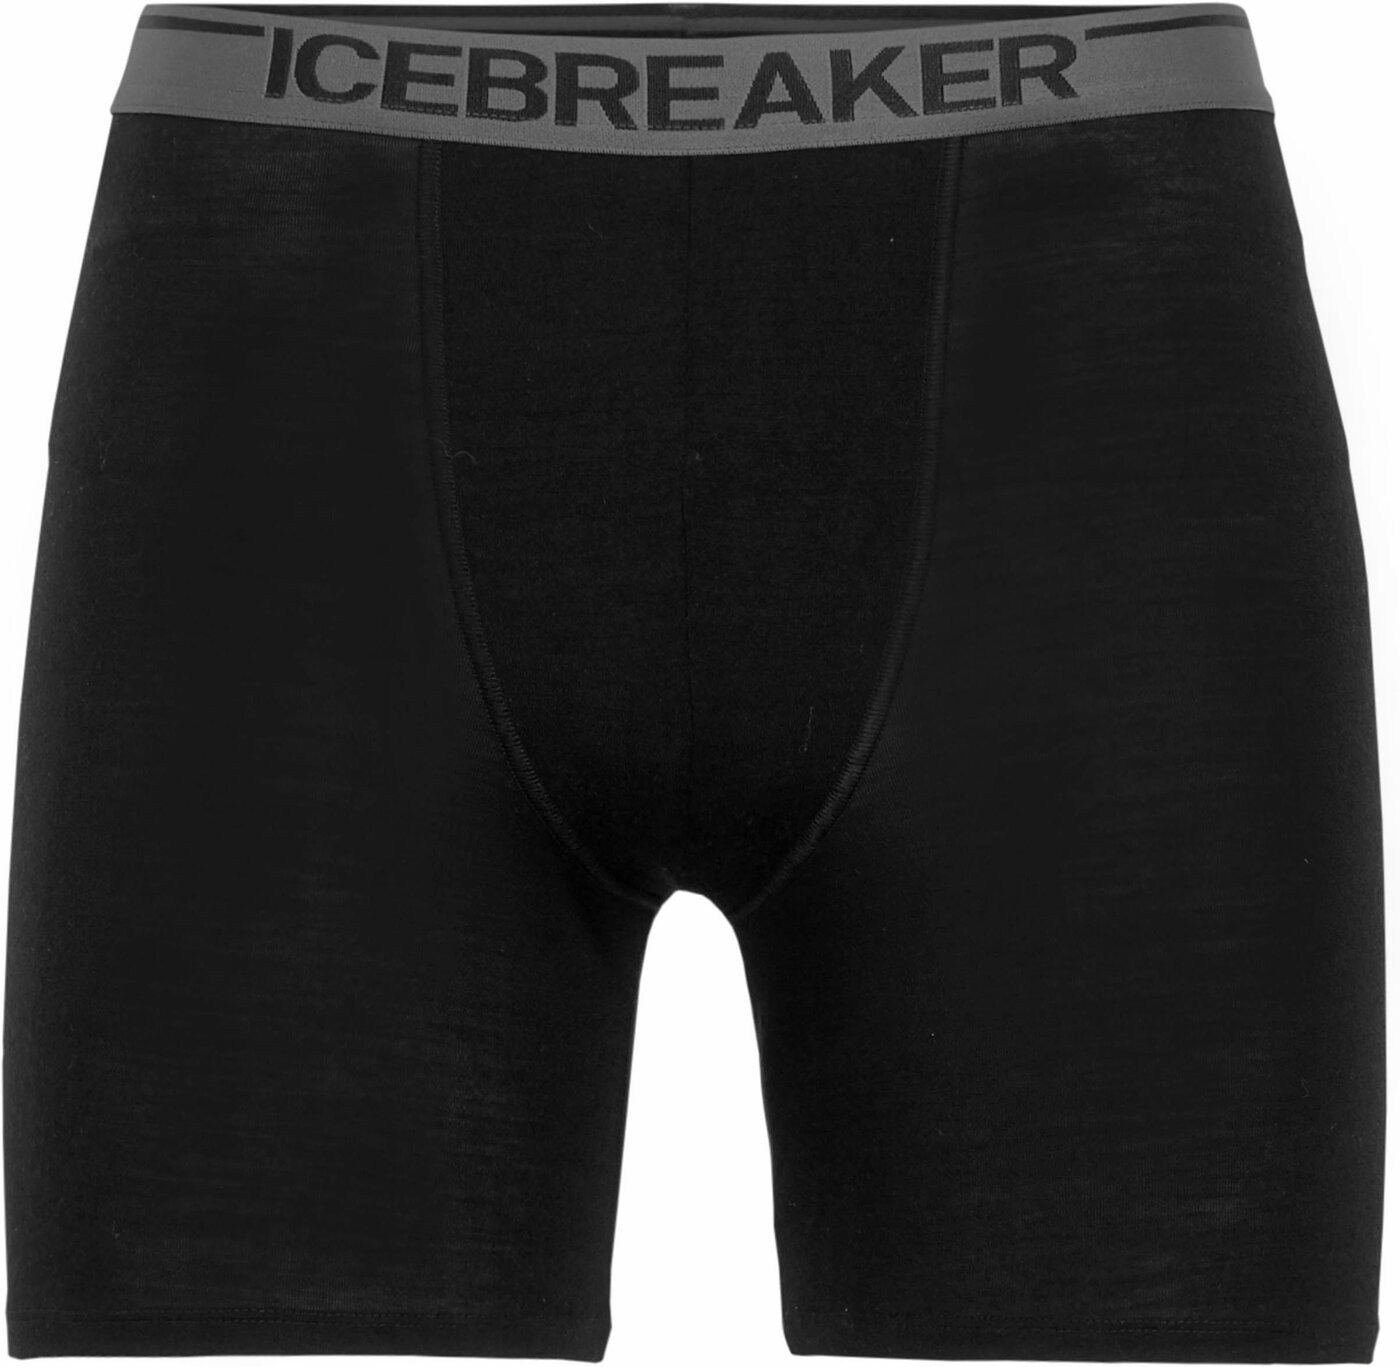 ICEBREAKER Badeshorts Mens Anatomica Long Boxers von ICEBREAKER